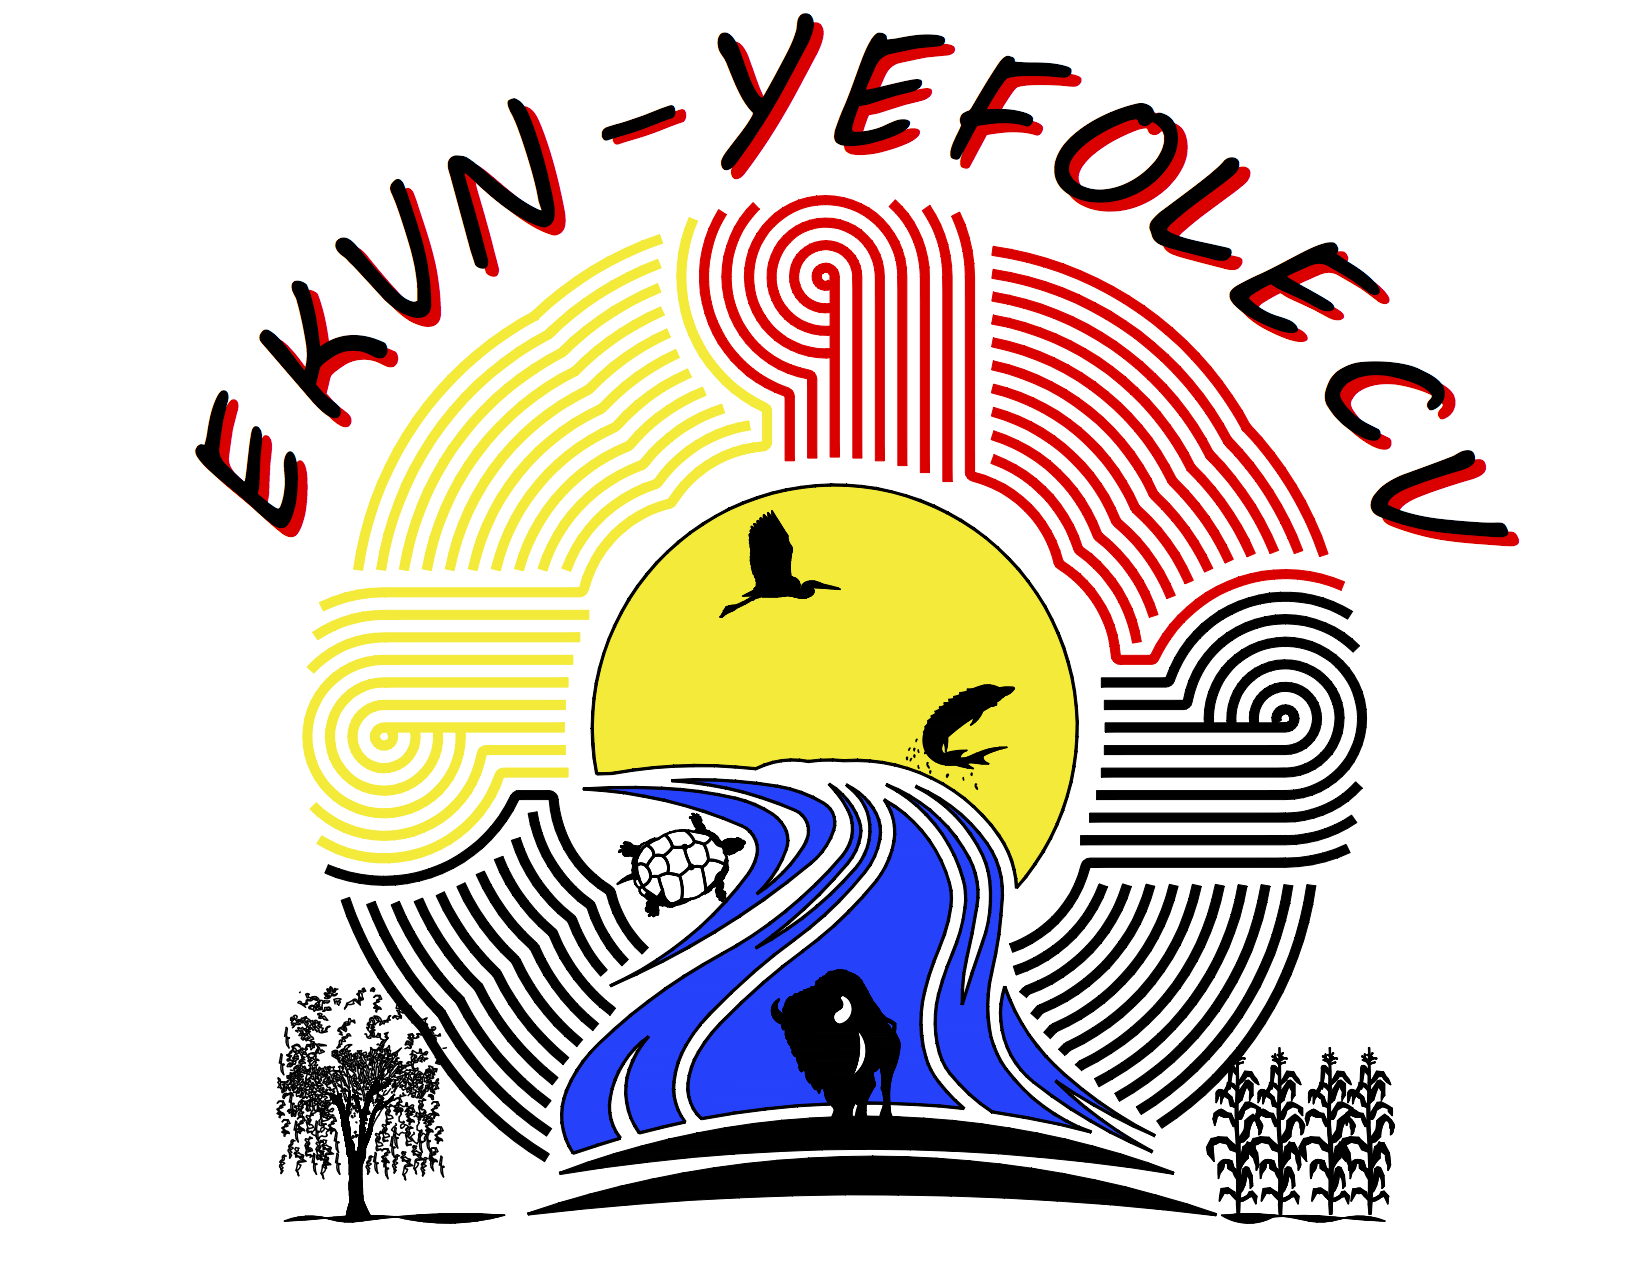 Ekvn-Yefolecv logo